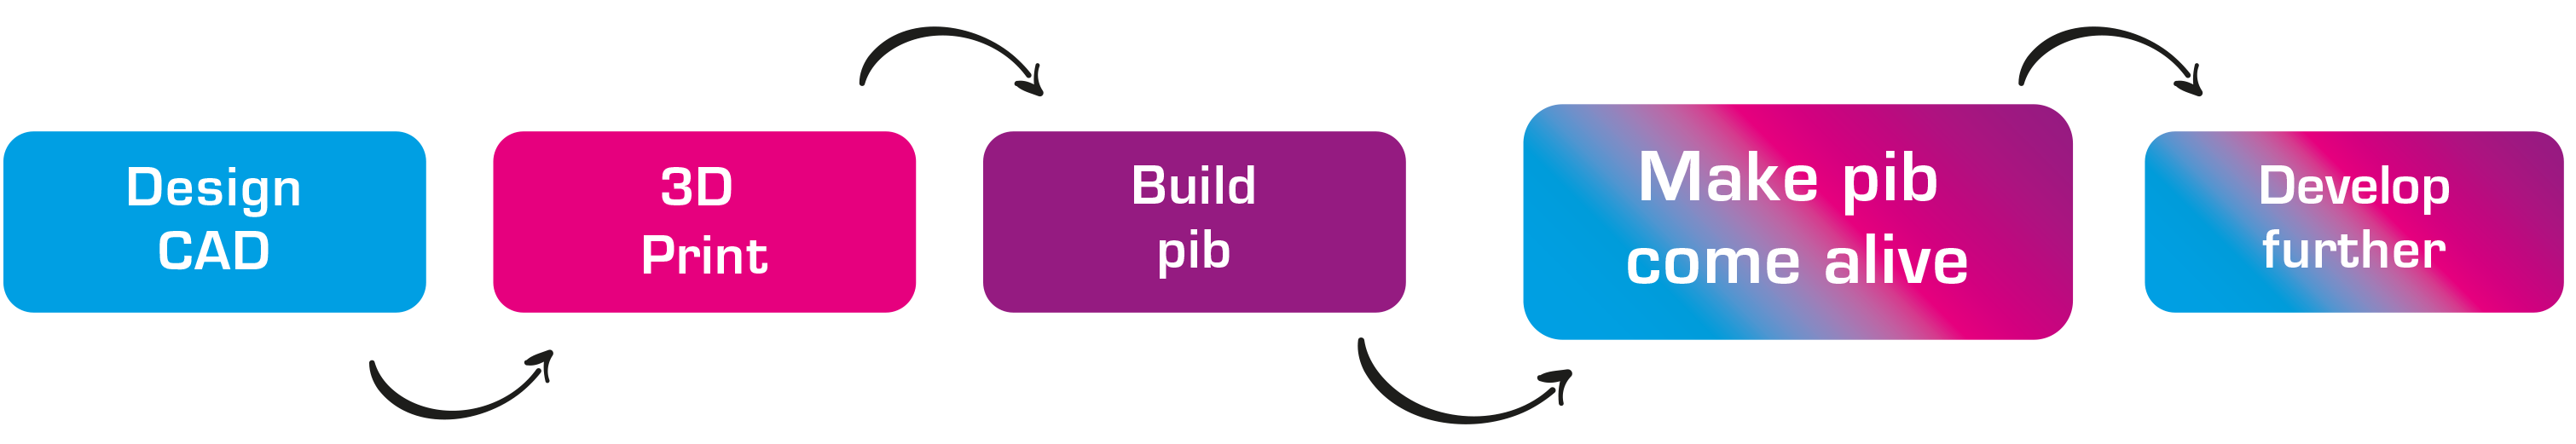 pib building process